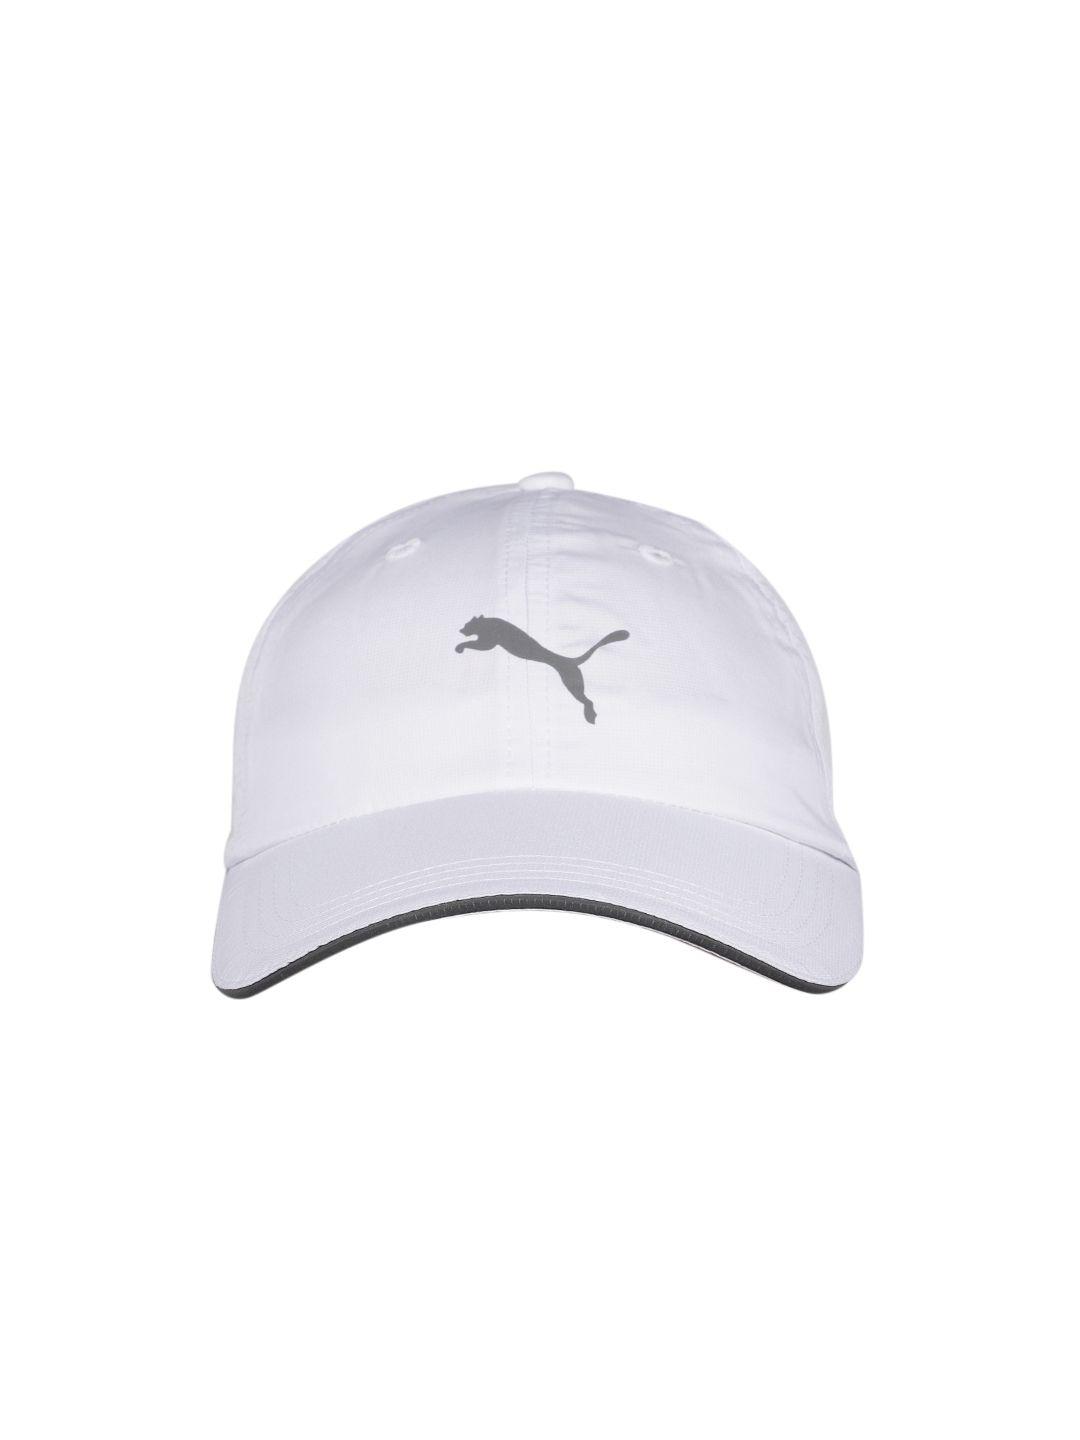 puma unisex white solid polyester reflective visor baseball cap